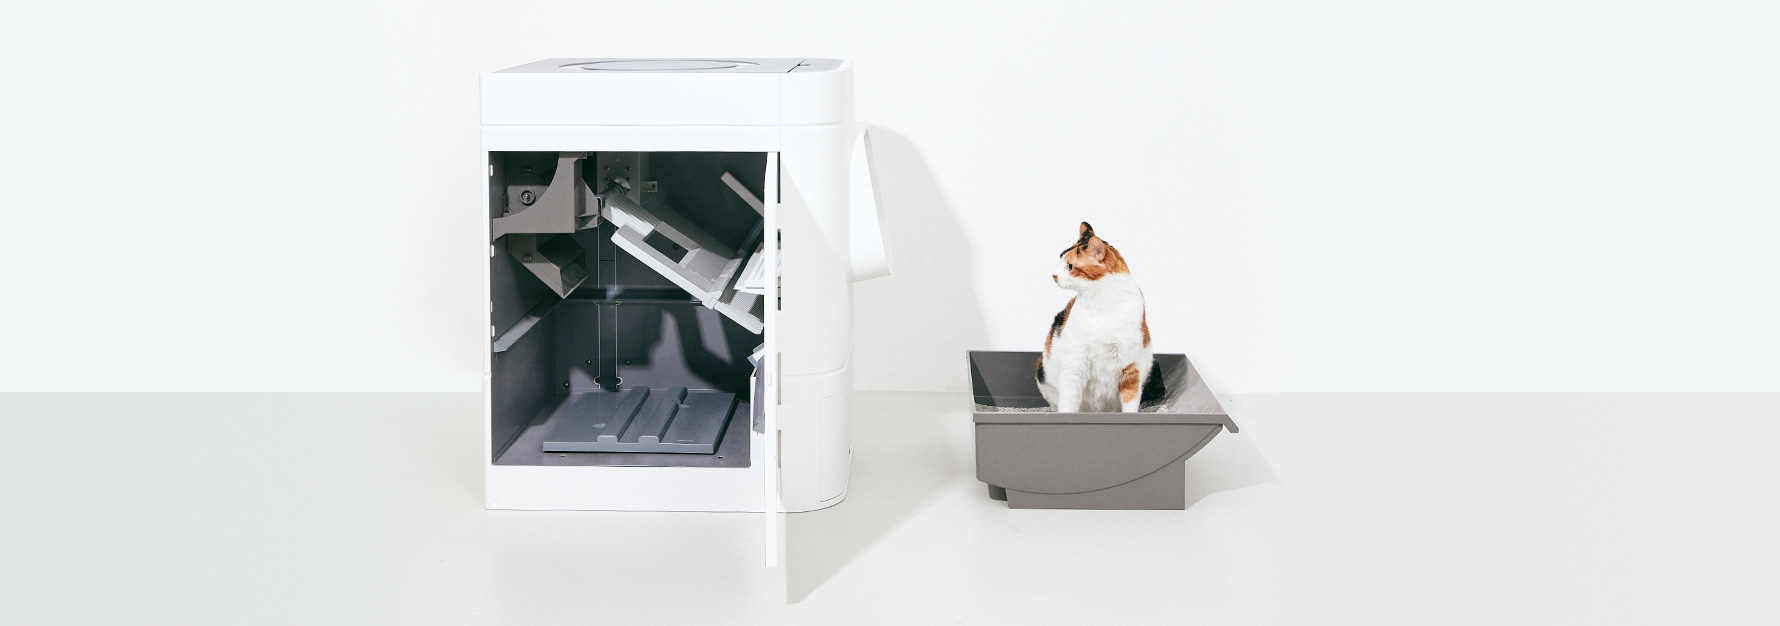 LavvieBot S 自動洗浄猫用トイレ 全自動トイレpetkit脱臭剤で室内空気質を維持します